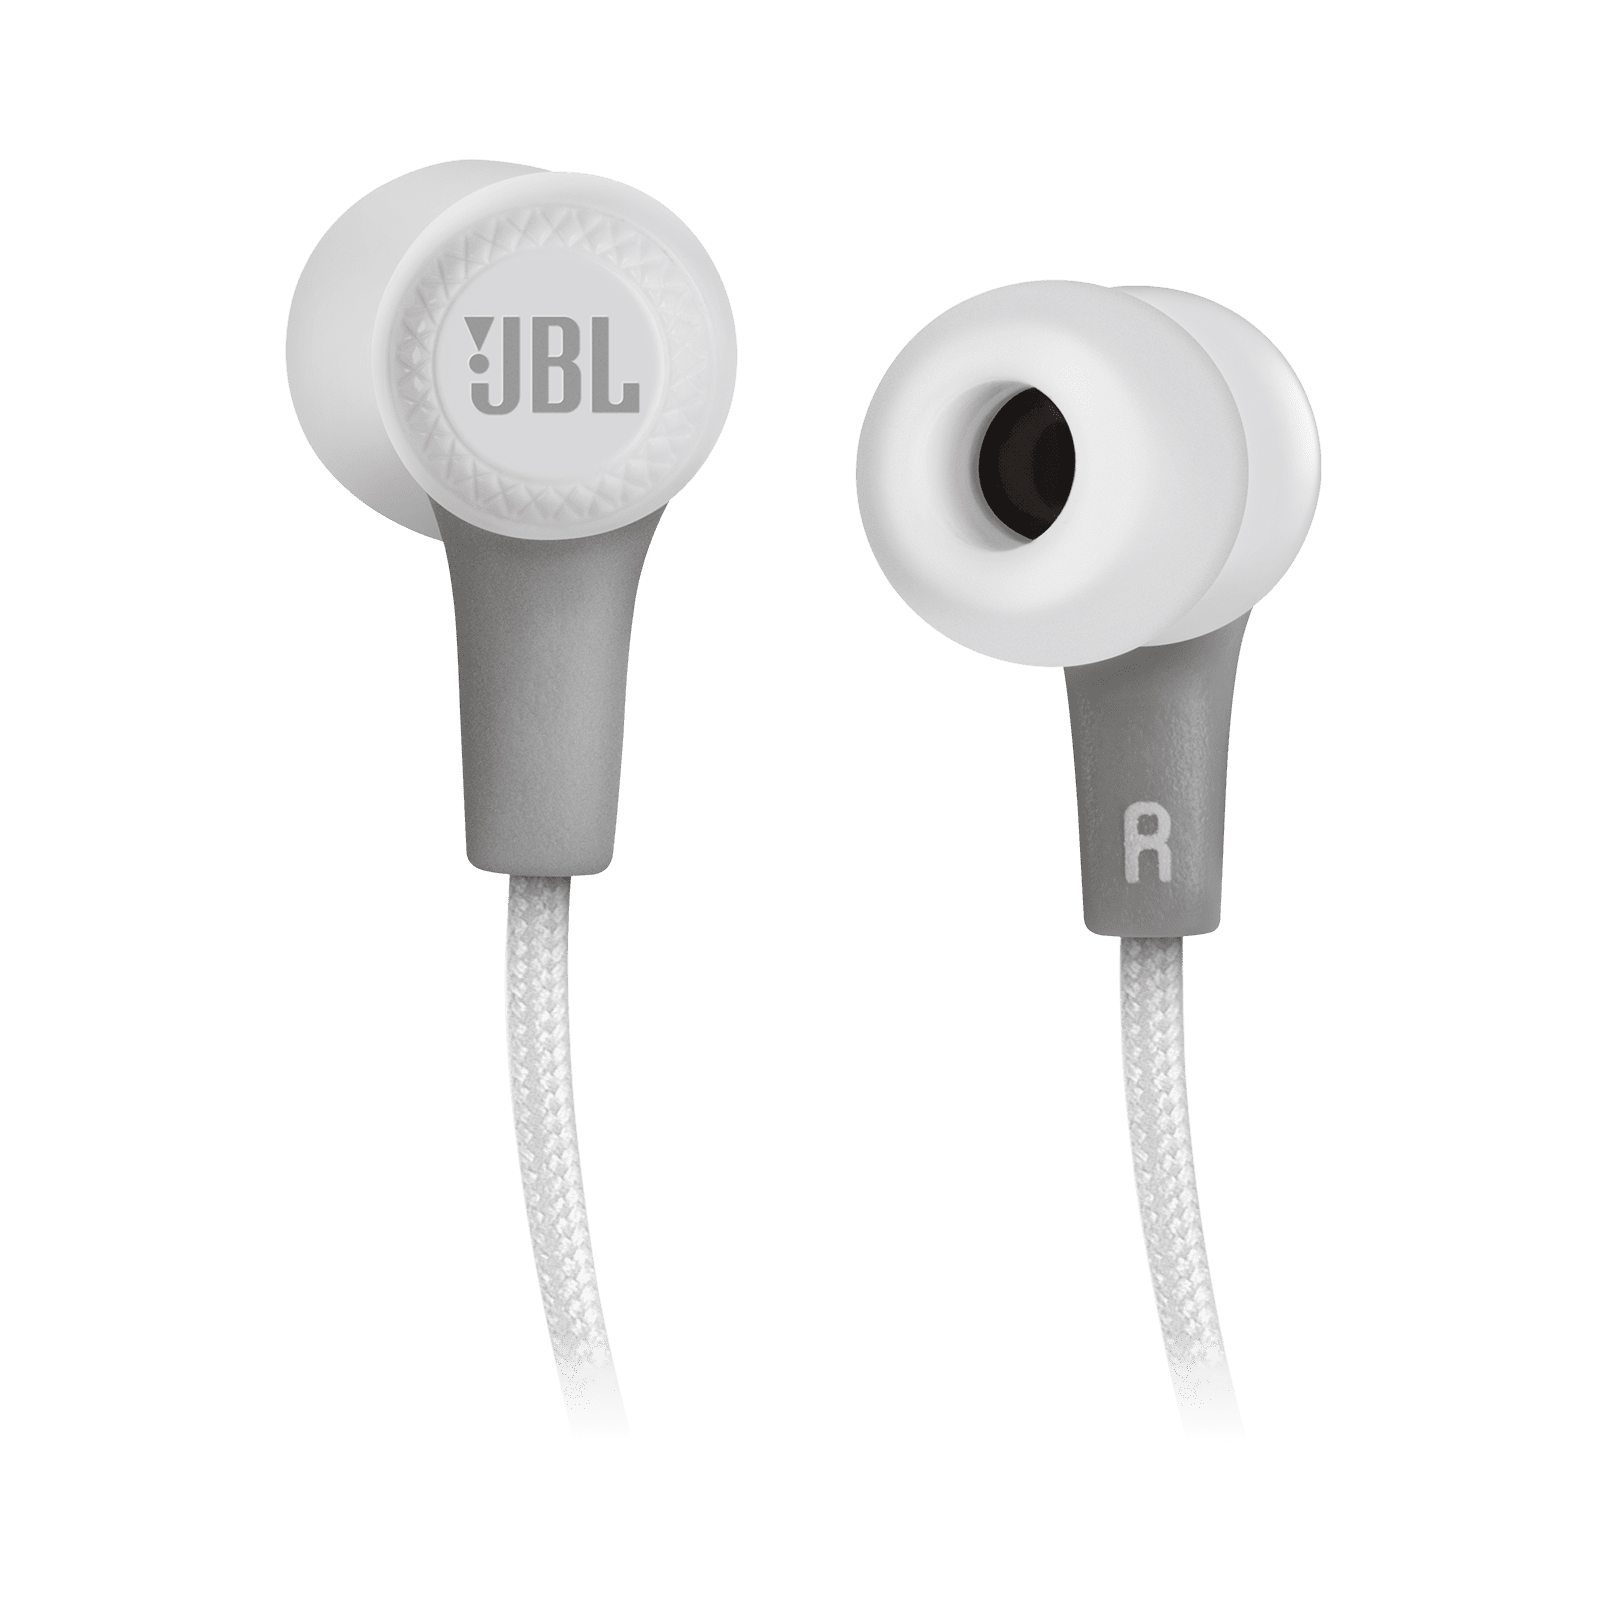 Misbruge Medic Energize JBL E25BT Wireless In-Ear Headphones with Long-Lasting Battery - Walmart.com